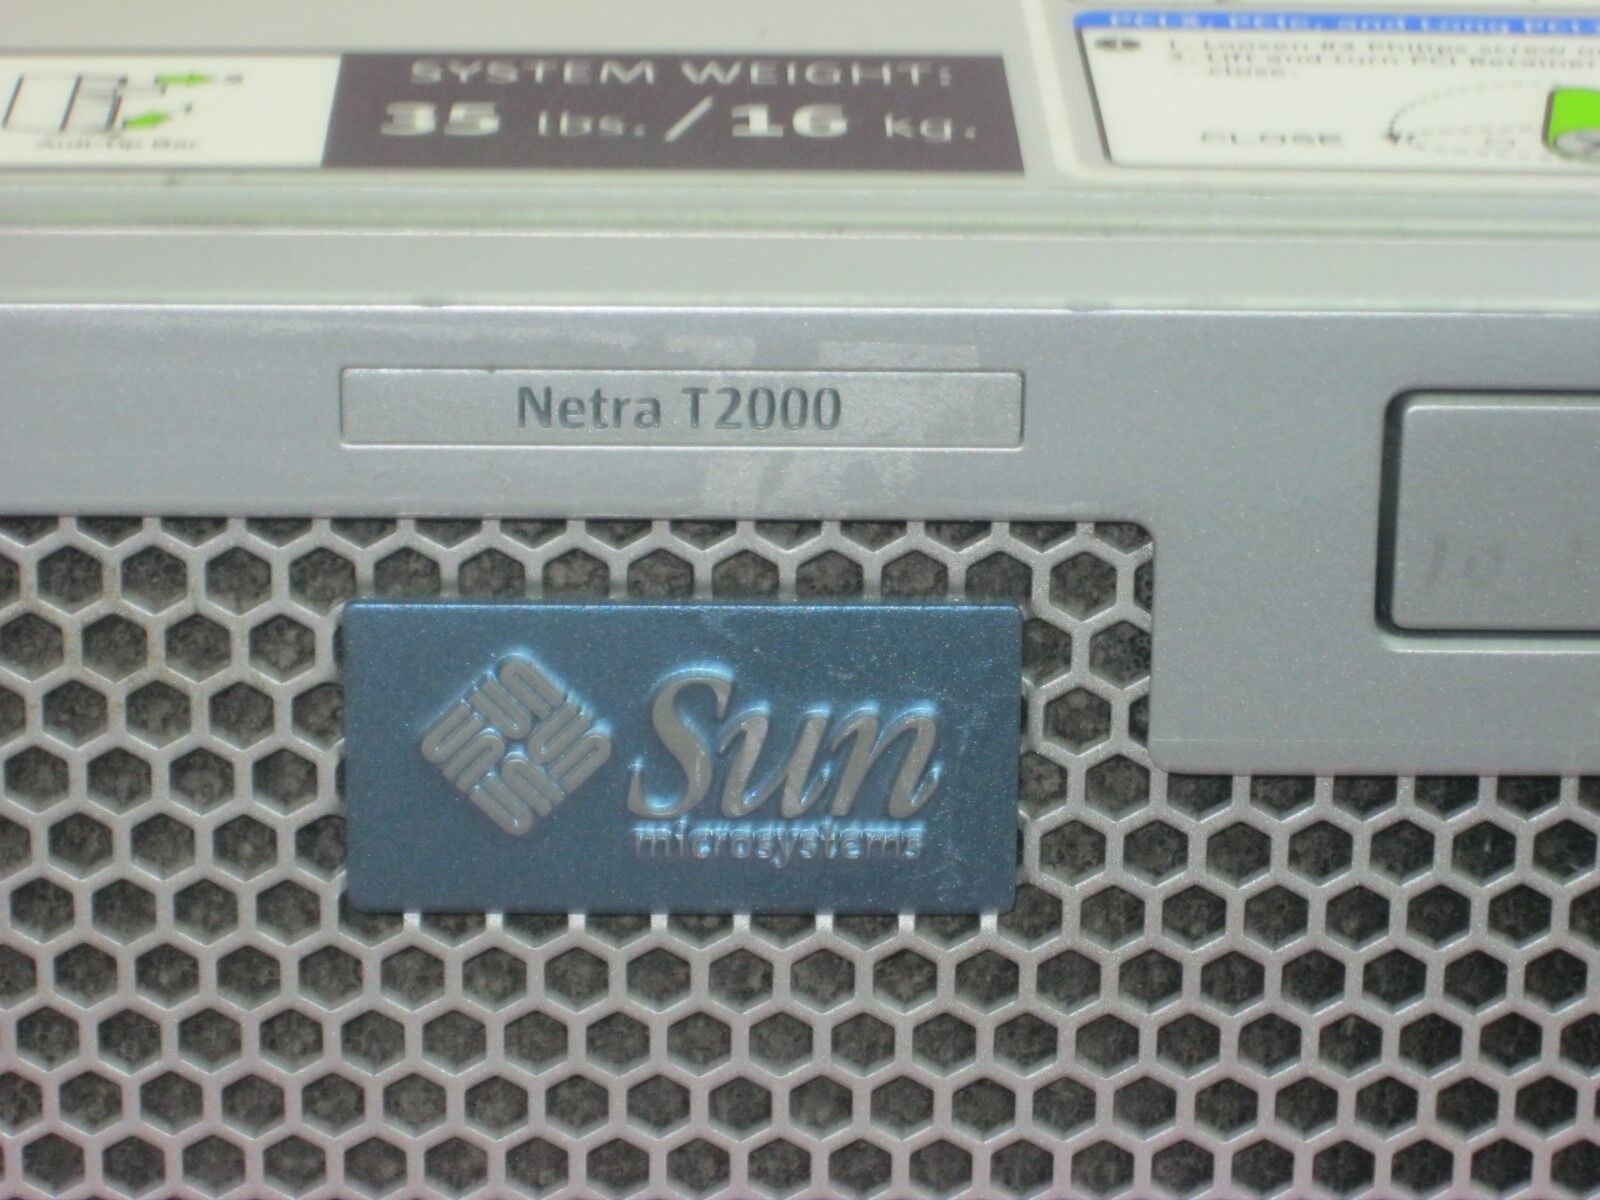 Sun Netra T2000 1.0GHz  4 CORE CPU 8GB mem, 2 * 73GB SAS,  DVD, 2 * AC P.S